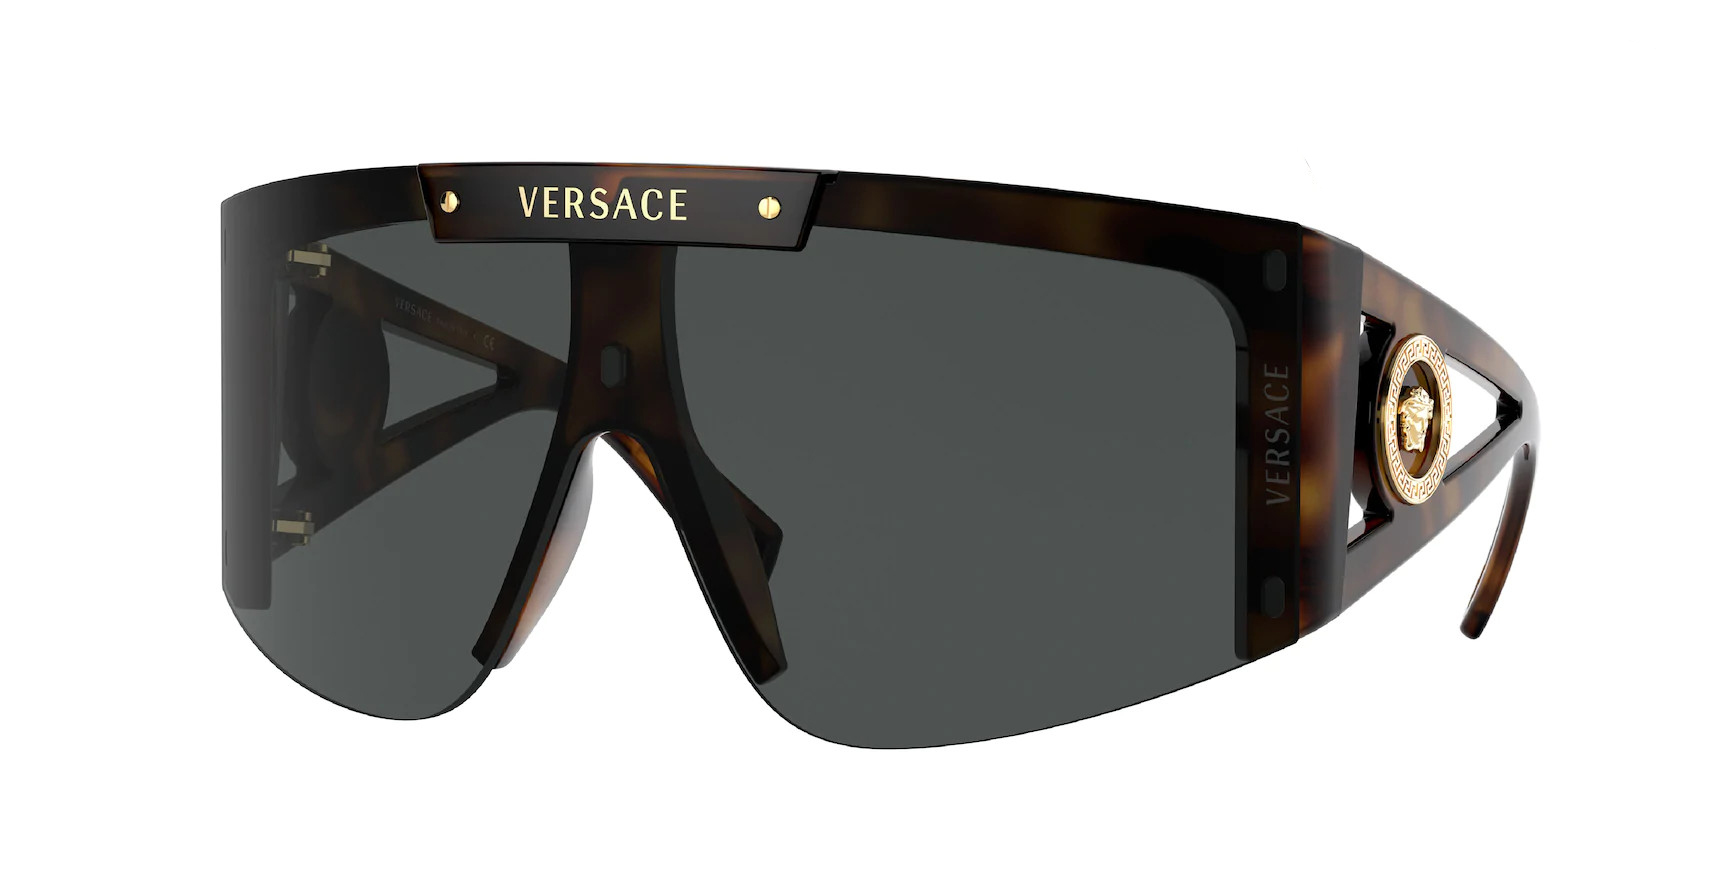 Designer Sunglasses - Prescription Eyeglasses - Ray-Ban, Prada ...